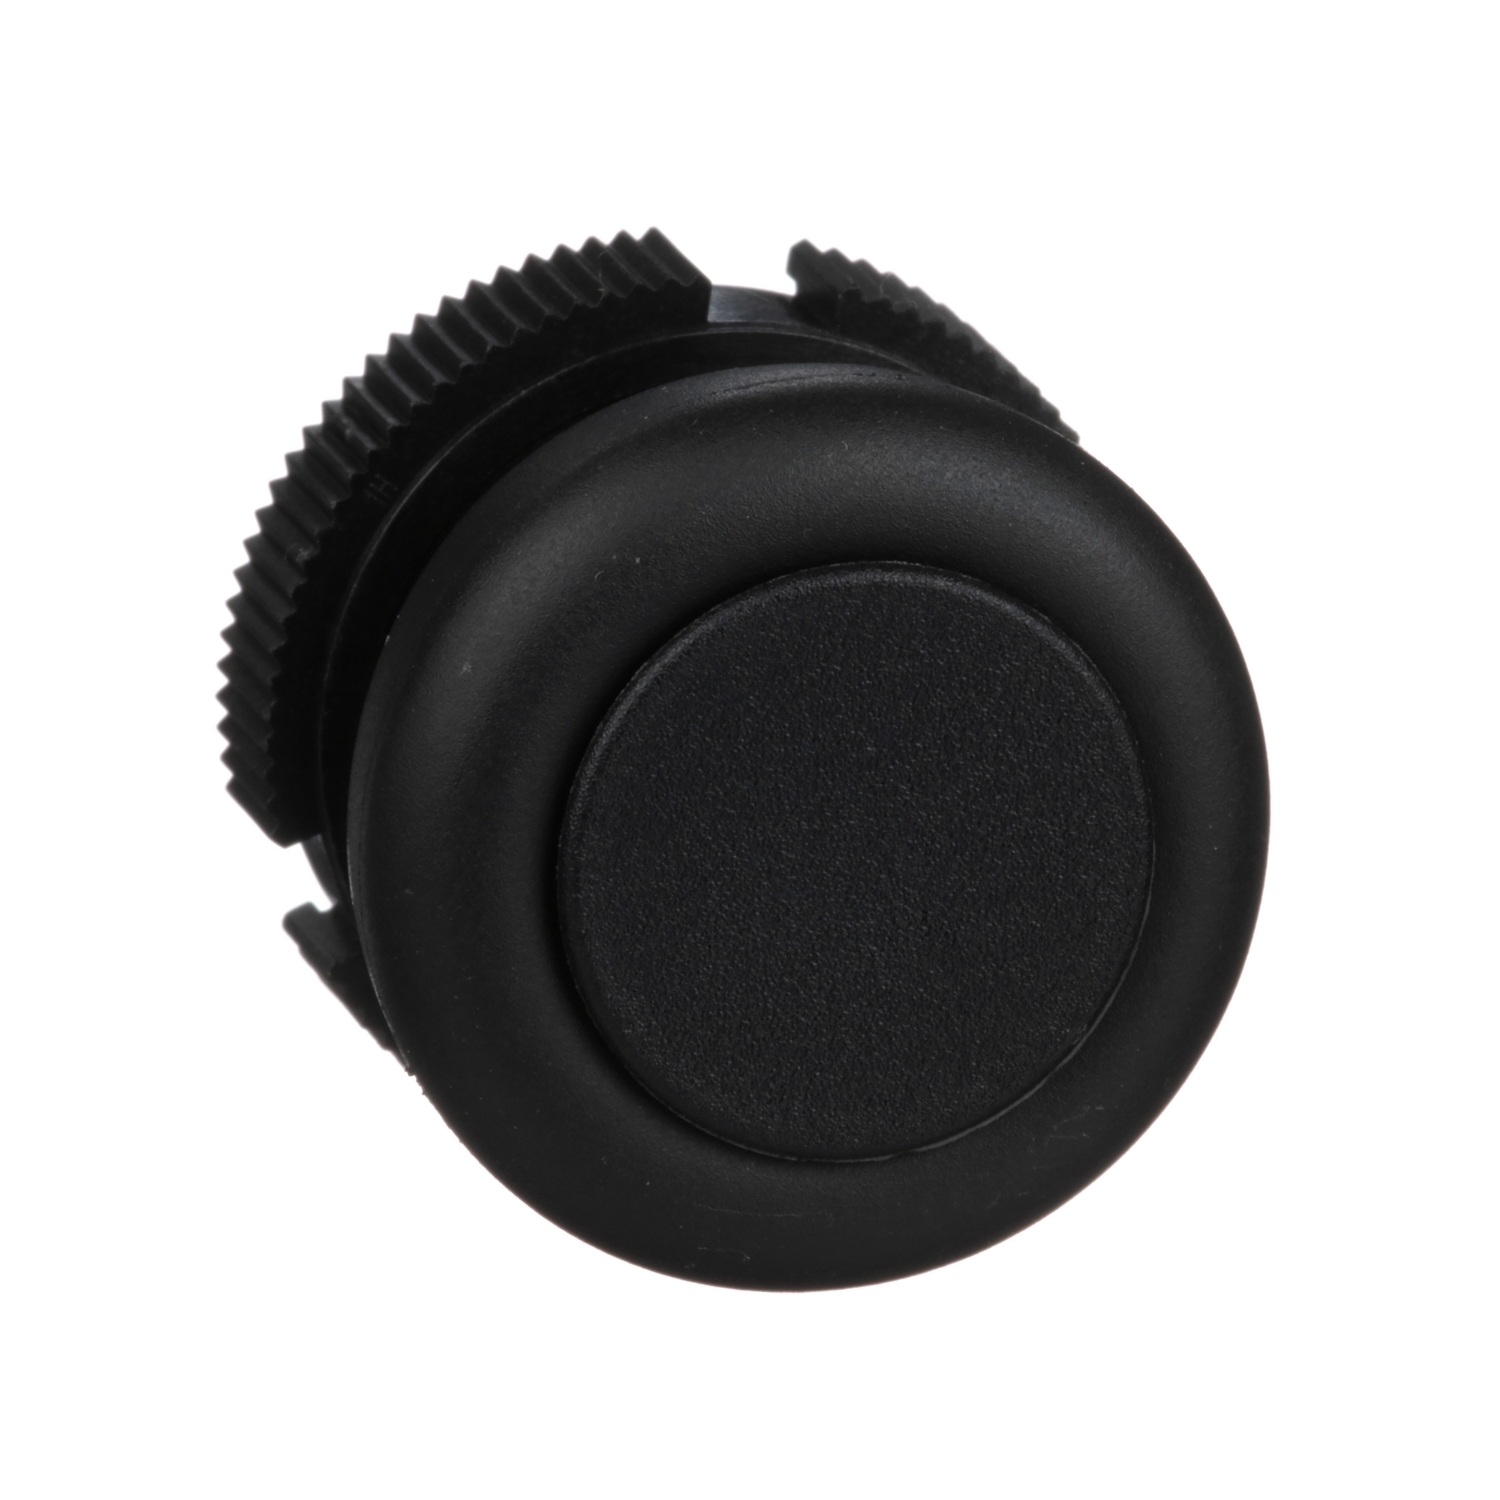 Push button head, Harmony XAC, plastic, black, booted, spring return